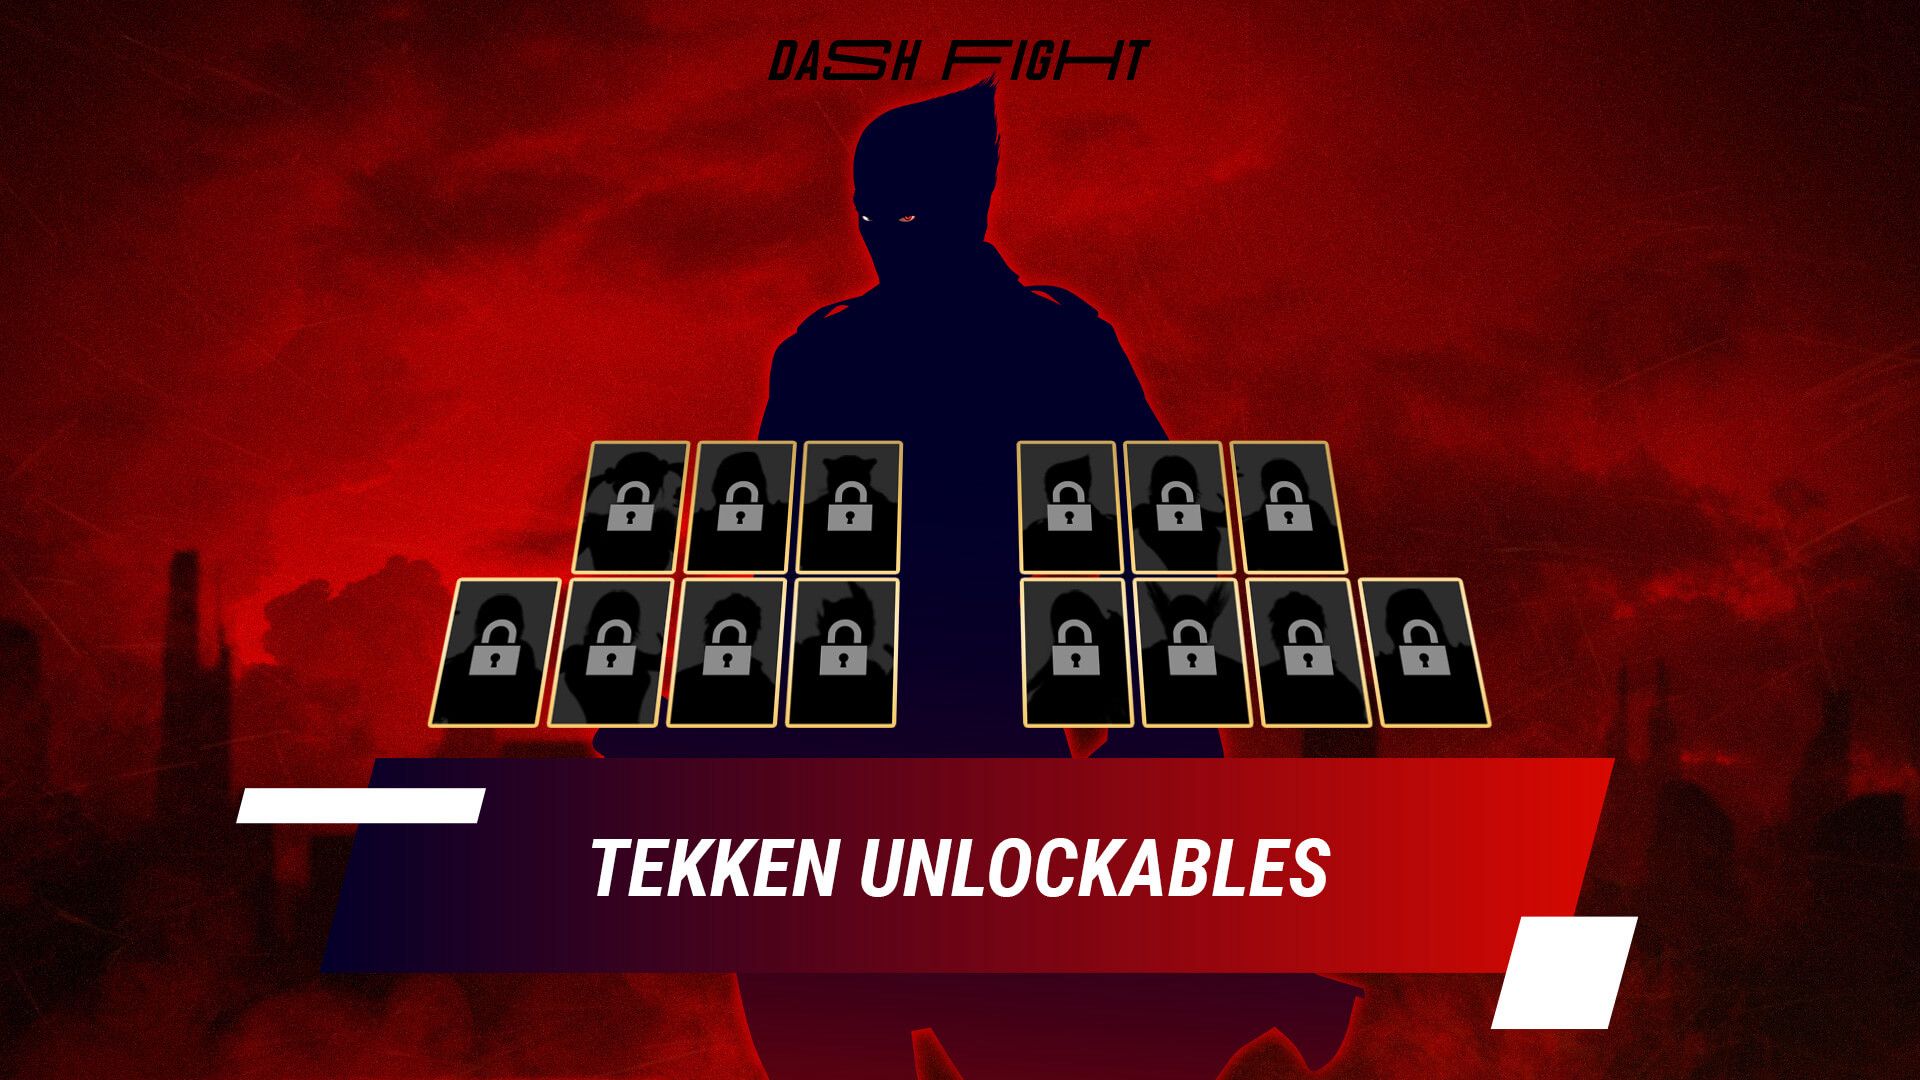 tekken 3 all characters unlocked save game download